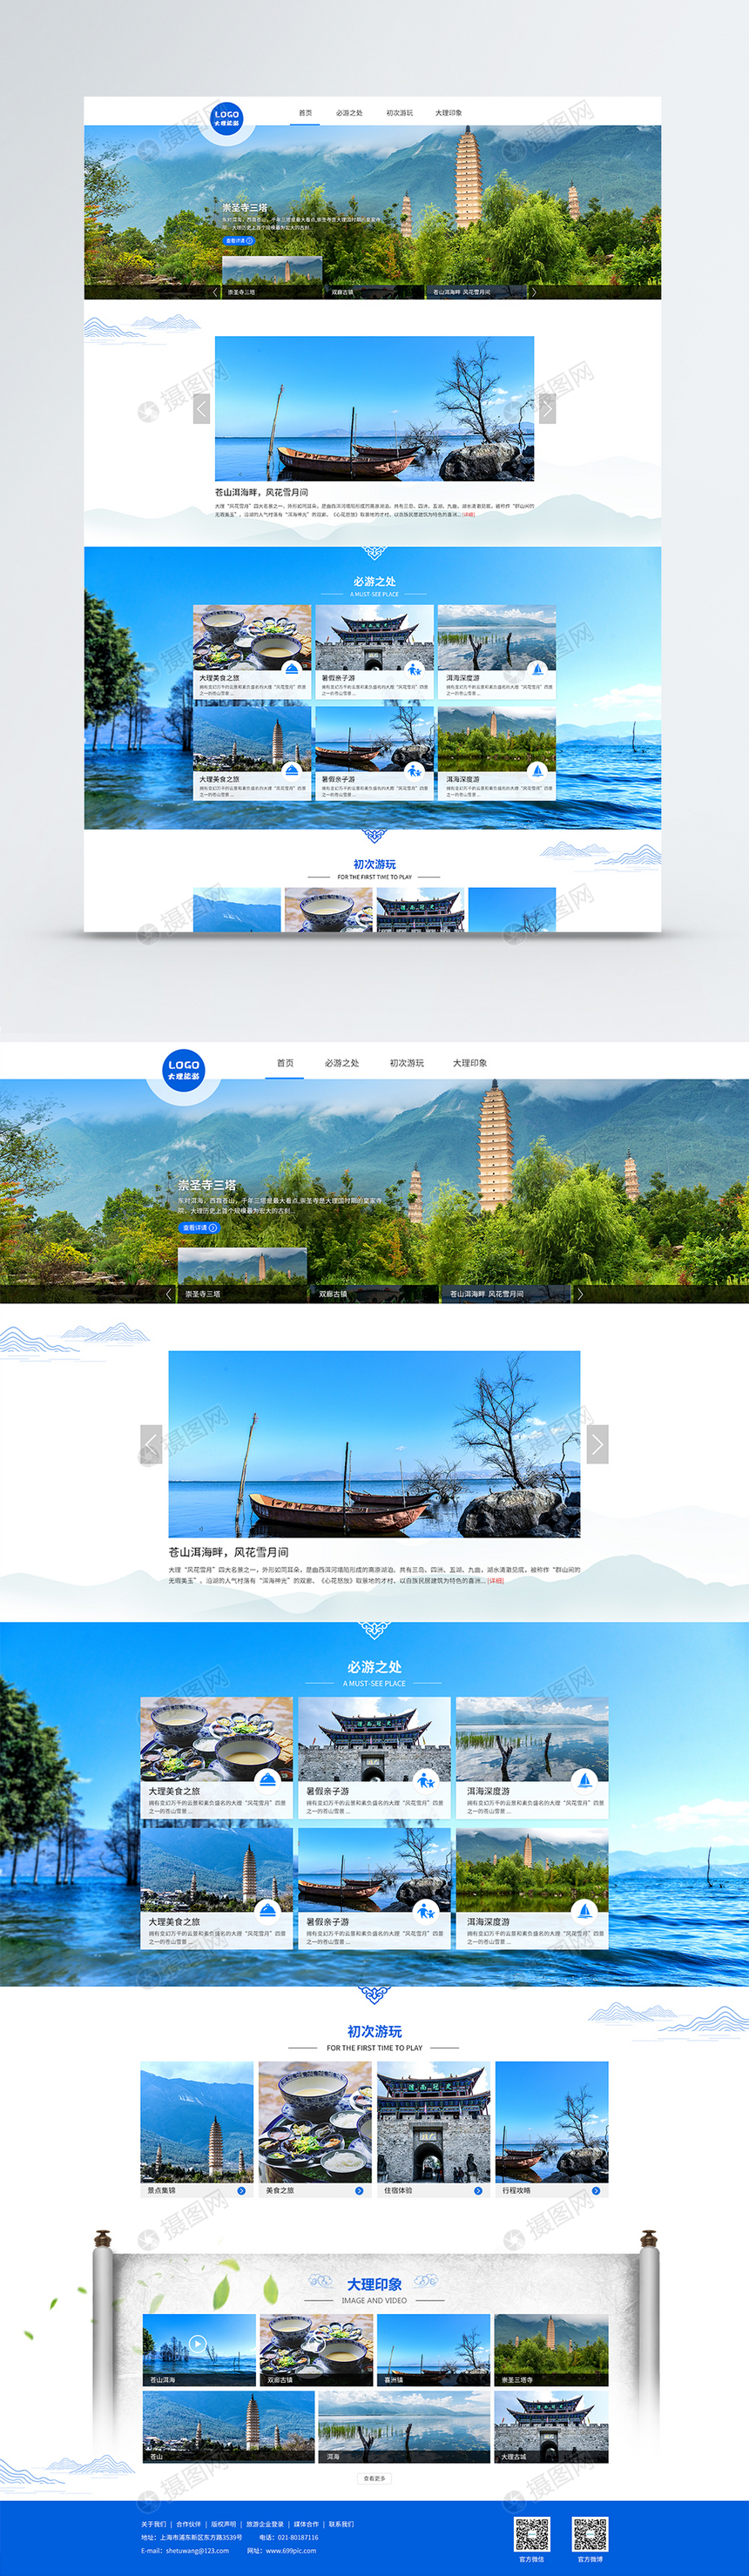 UI设计云南大理旅游web界面图片